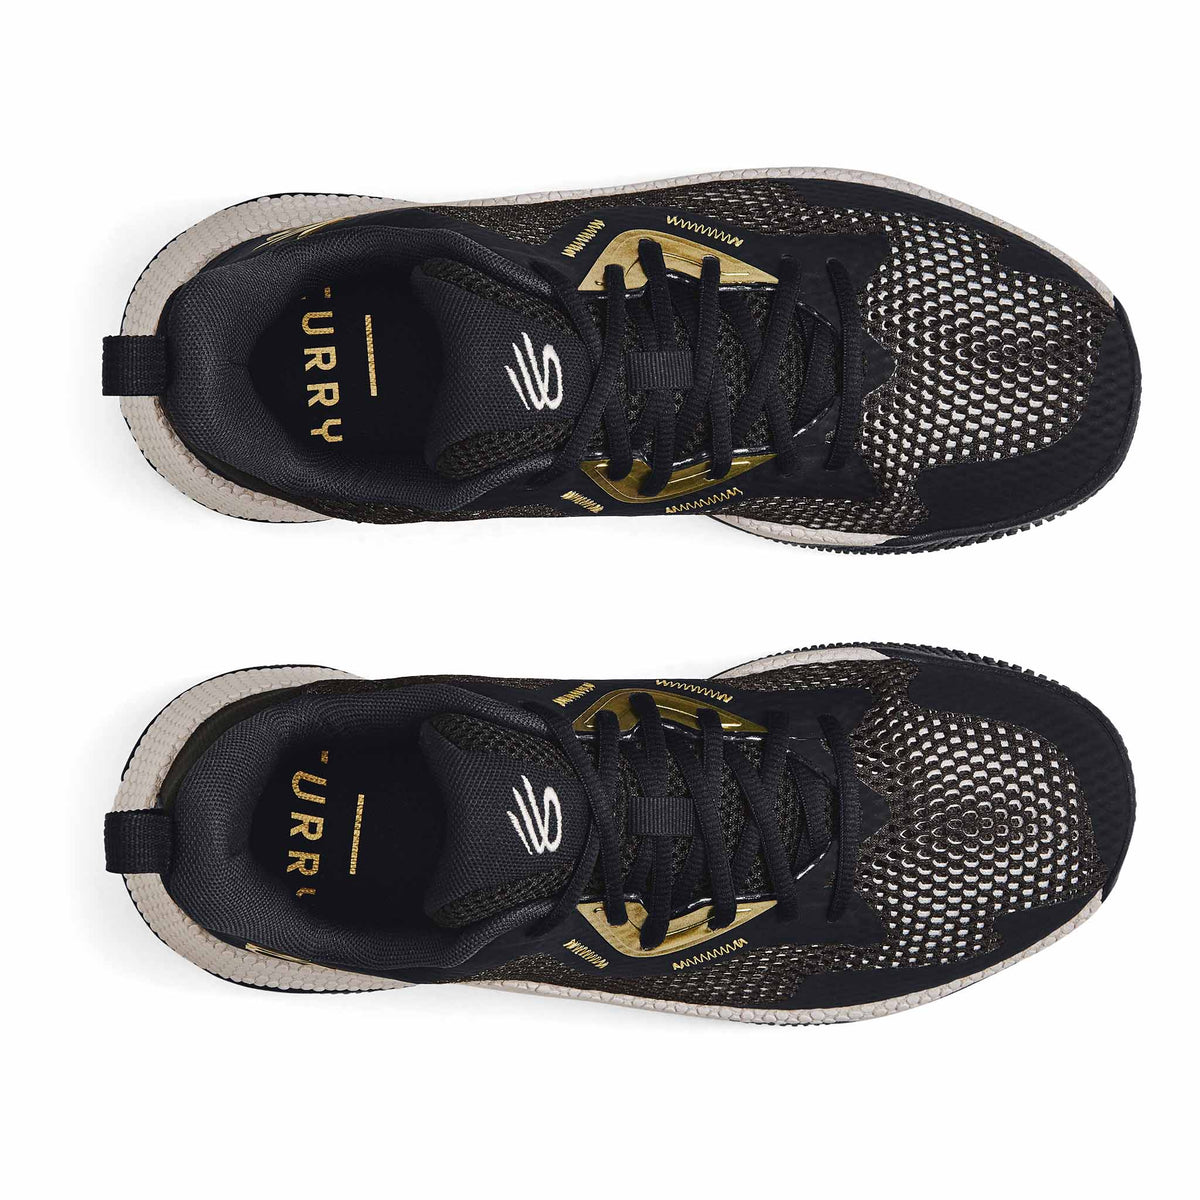 UA Curry Hovr Splash-3 chaussures de basketball - Noir / Gris / Or Métallique